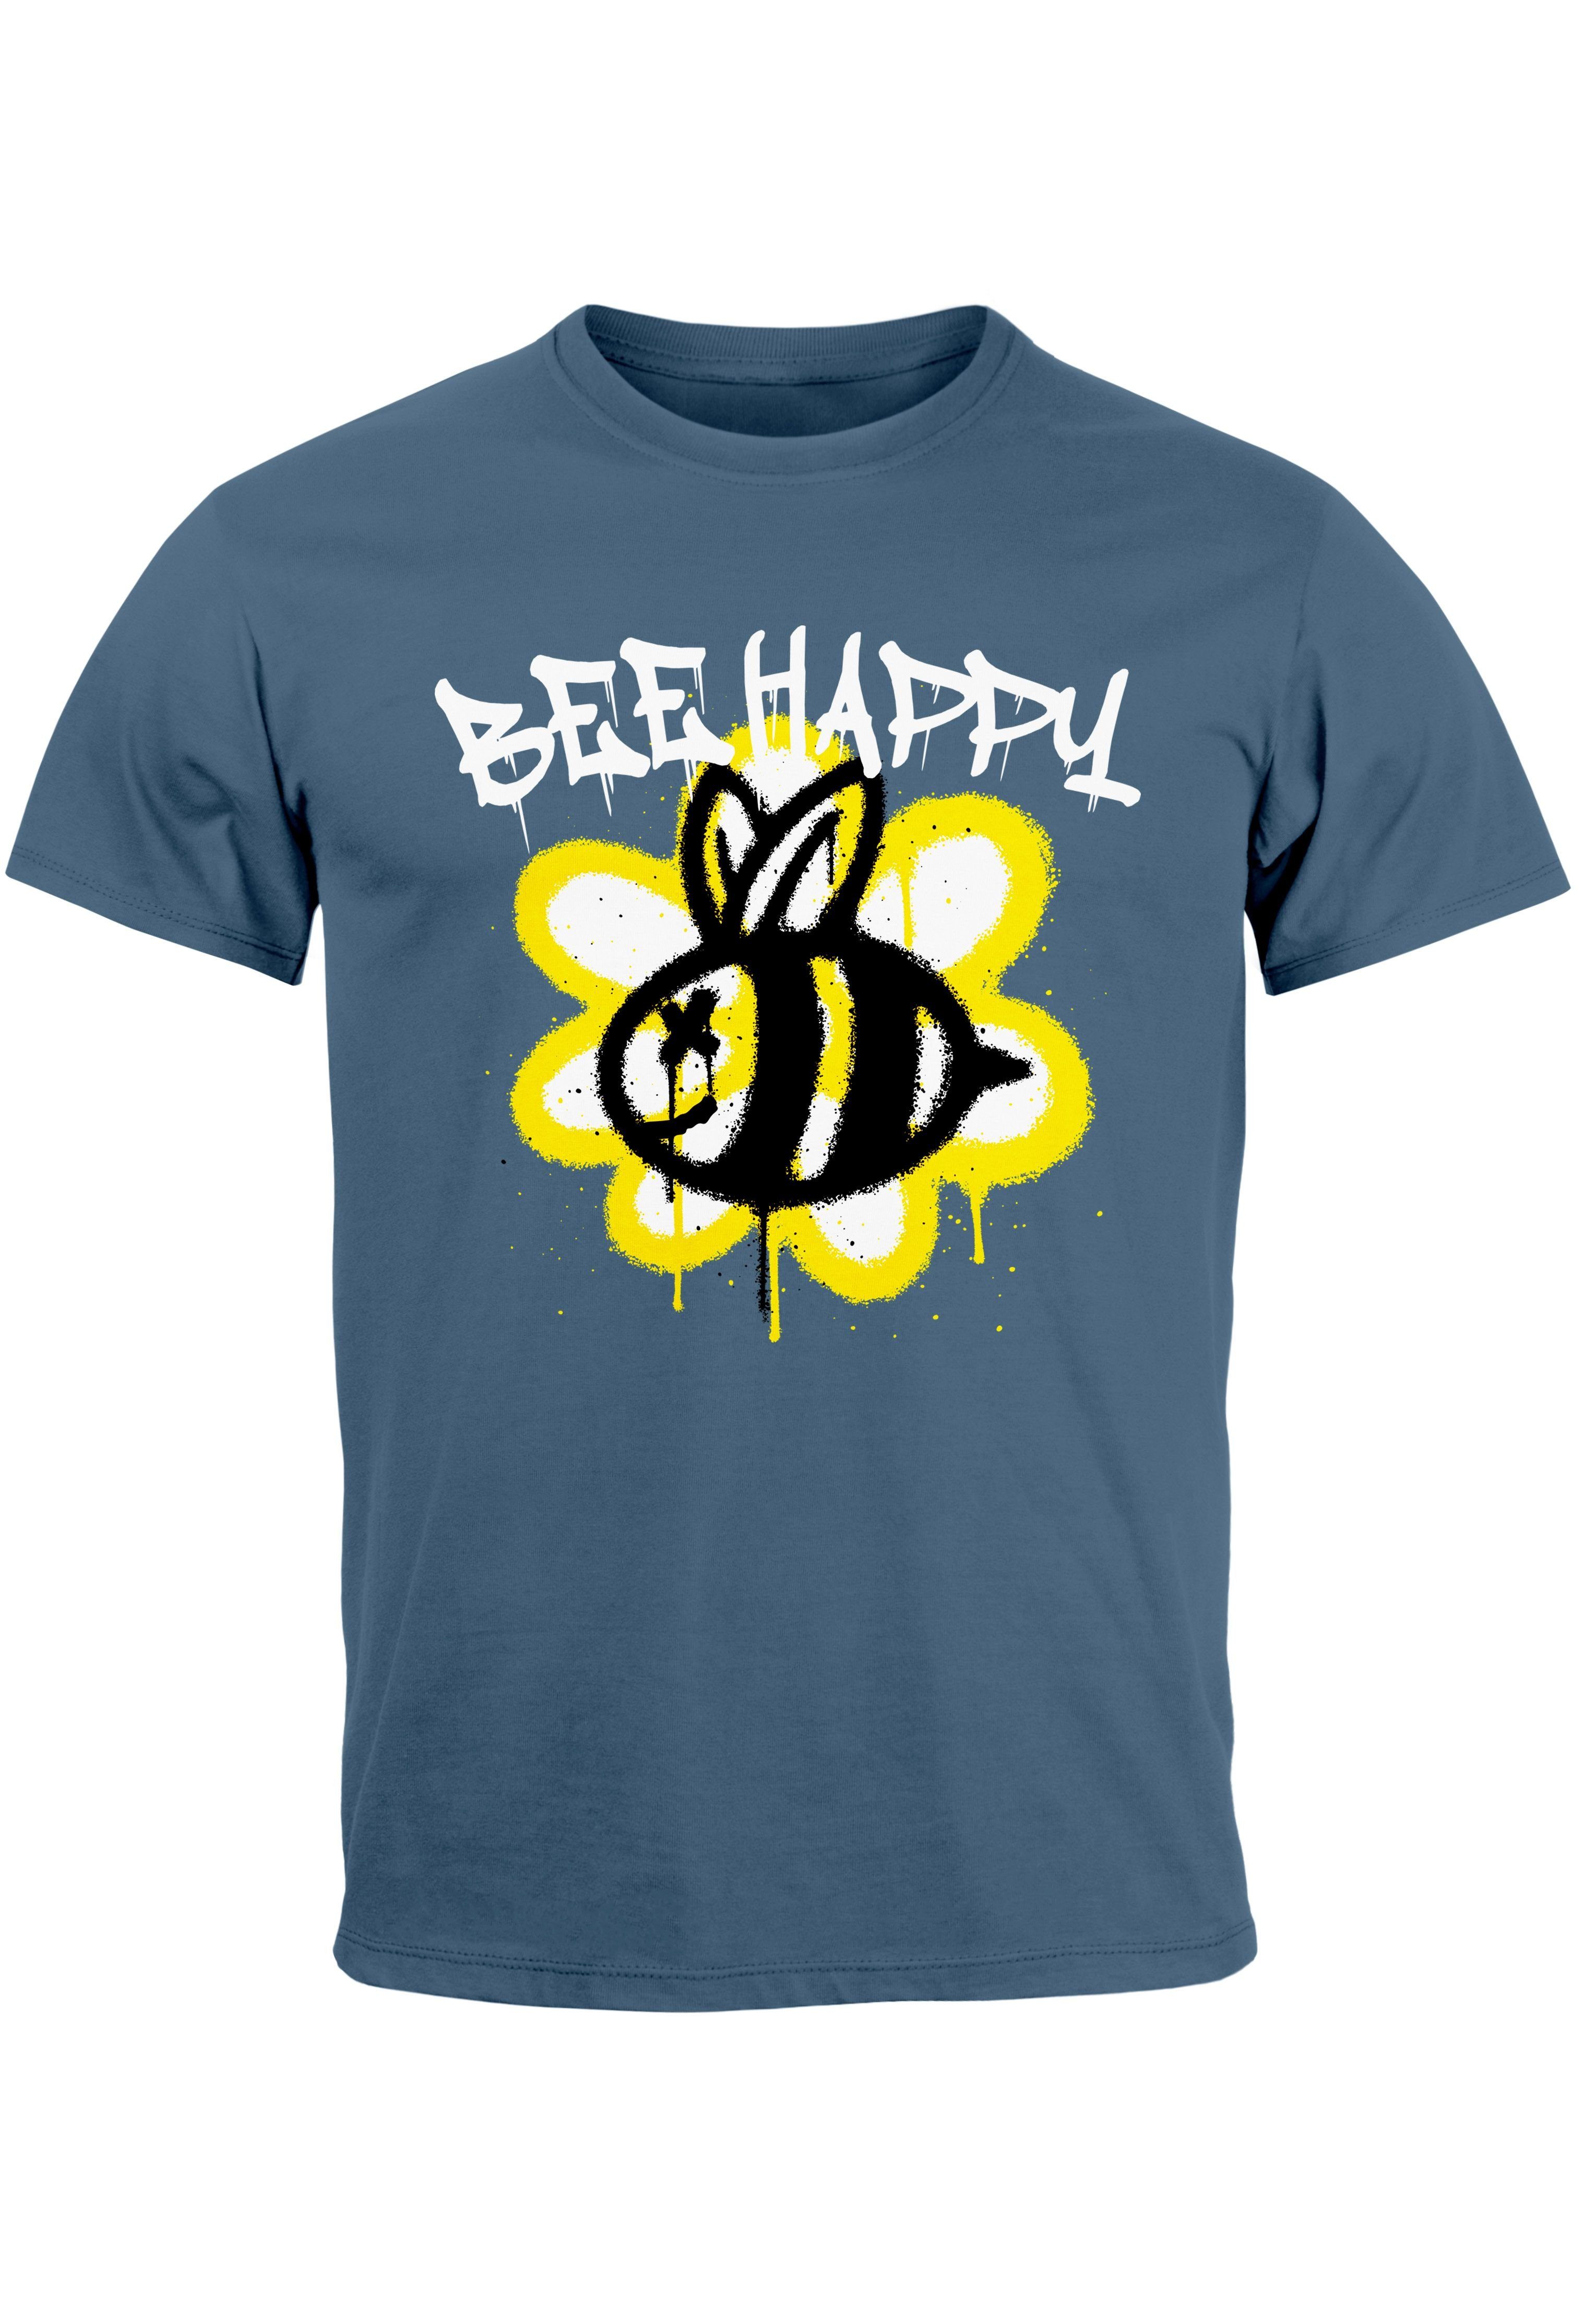 Neverless Print-Shirt Herren T-Shirt Aufdruck Bee Happy Biene Blume Graffiti SchriftzugFashi mit Print denim blue | T-Shirts